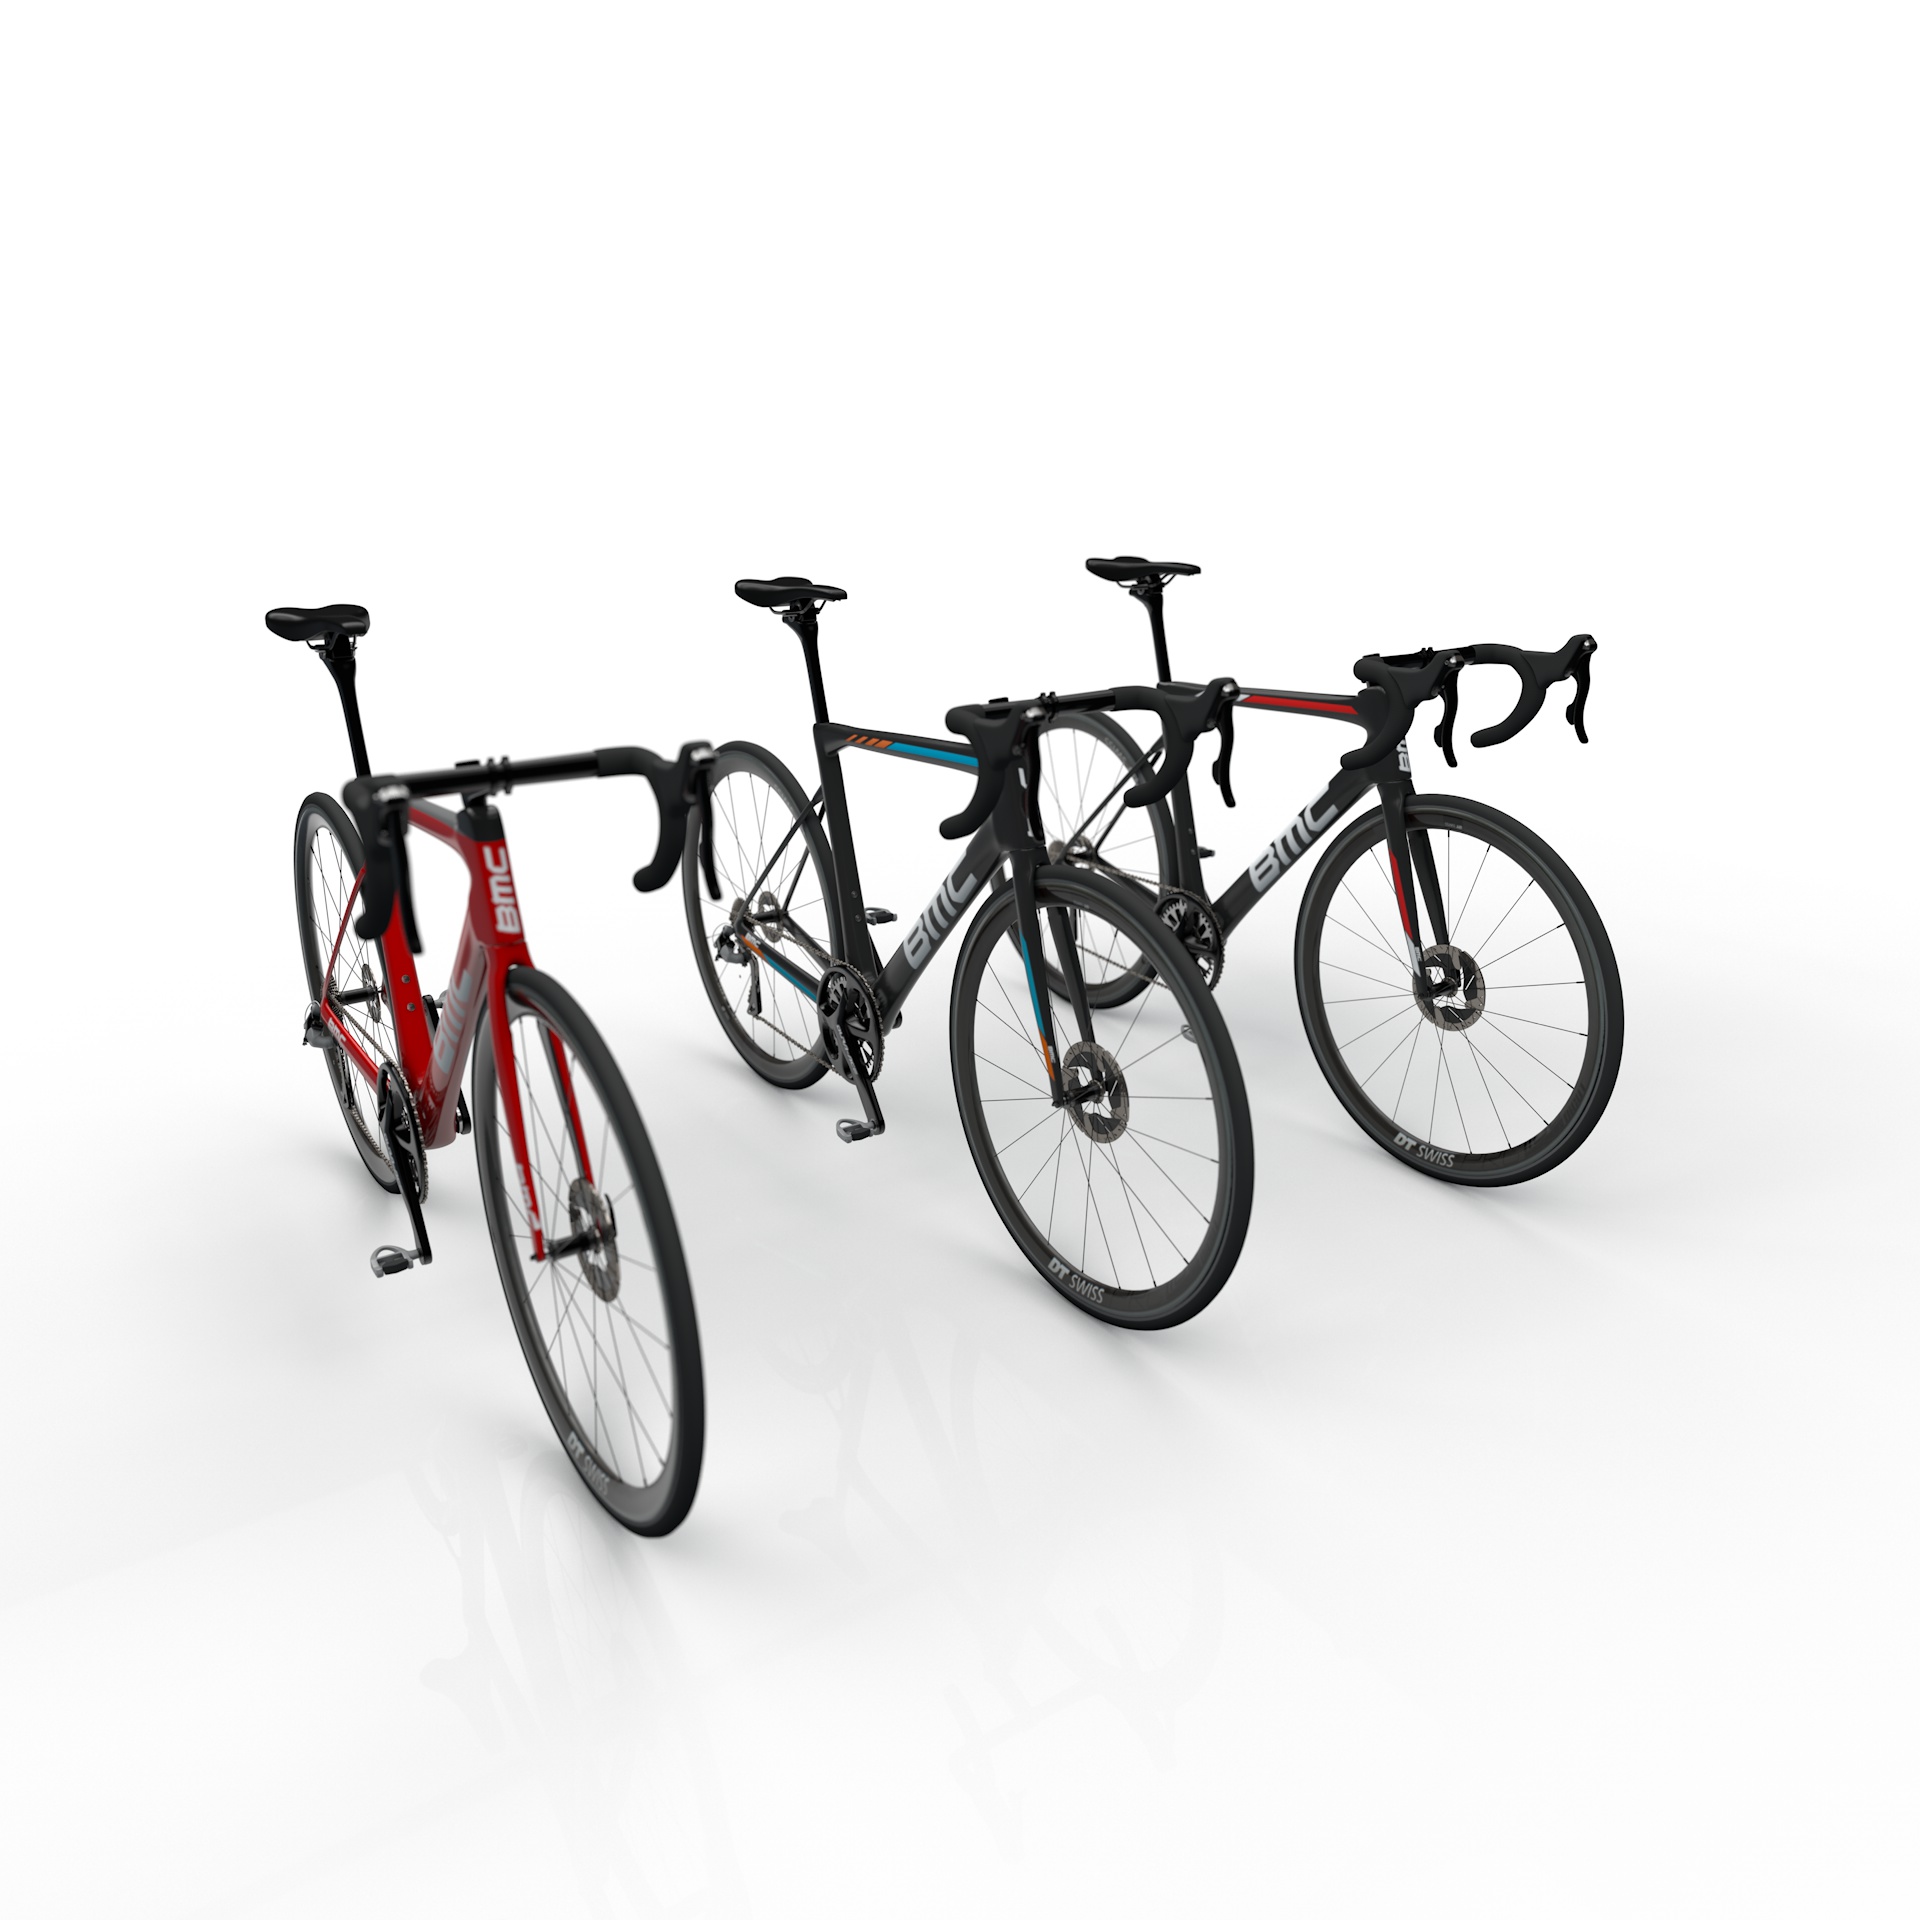 Racing Bike BMC Teammachine SLR01 2018 by 3dtreatment | 3DOcean